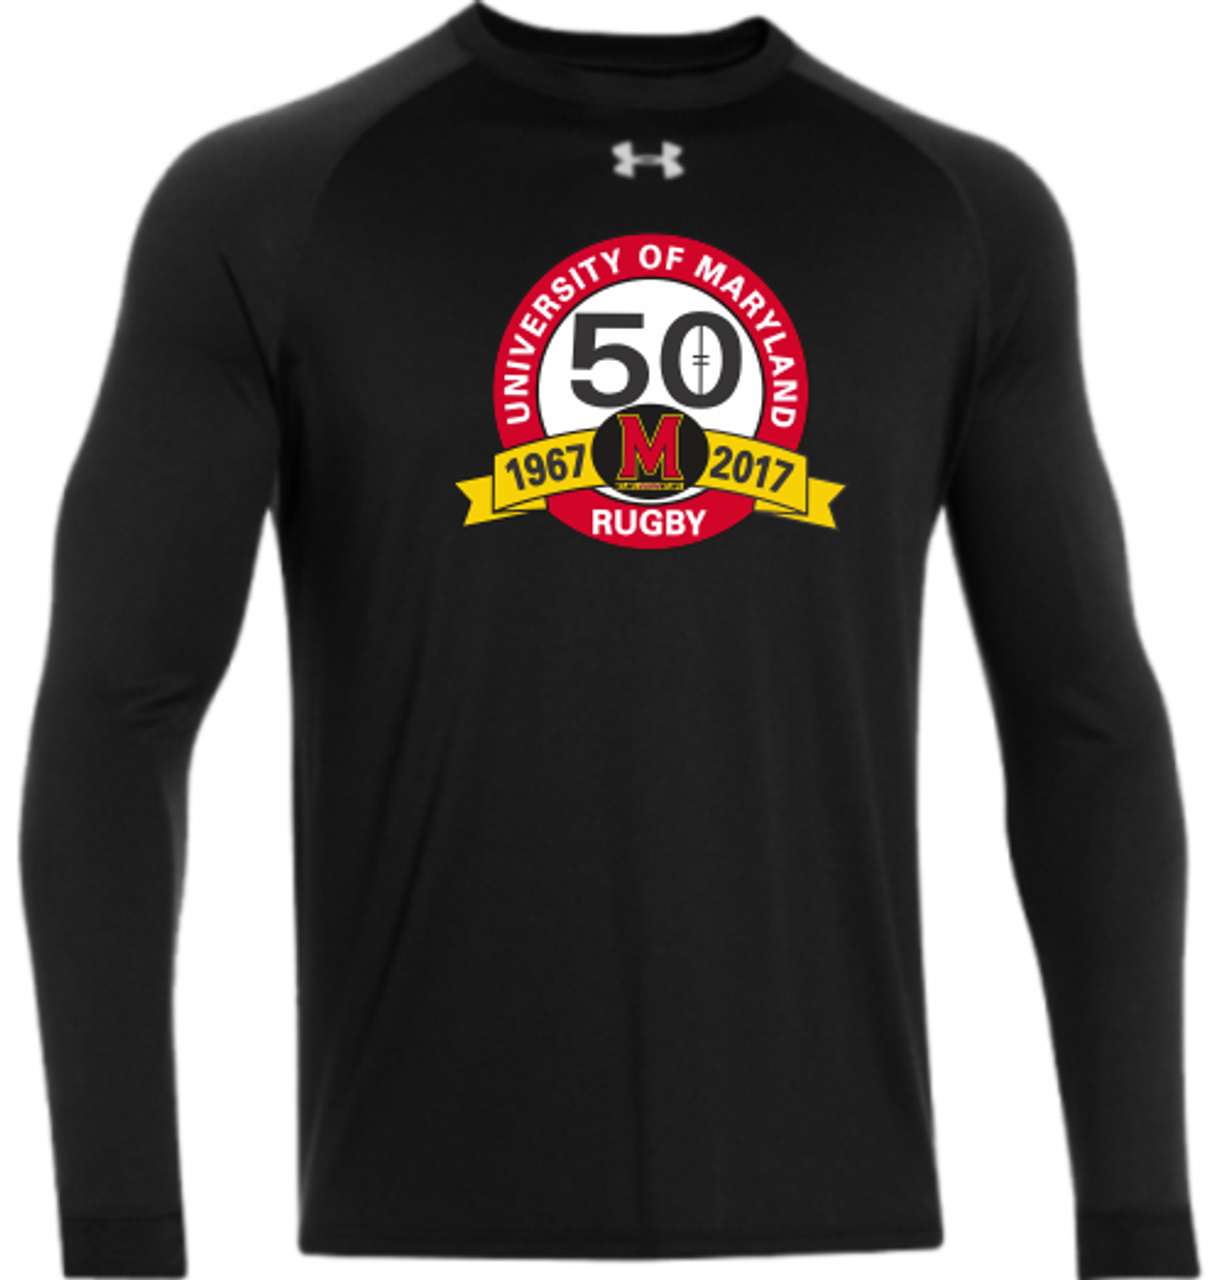 Univ of Maryland Rugby 50th Anniversary Seal UA Locker Tee, Black